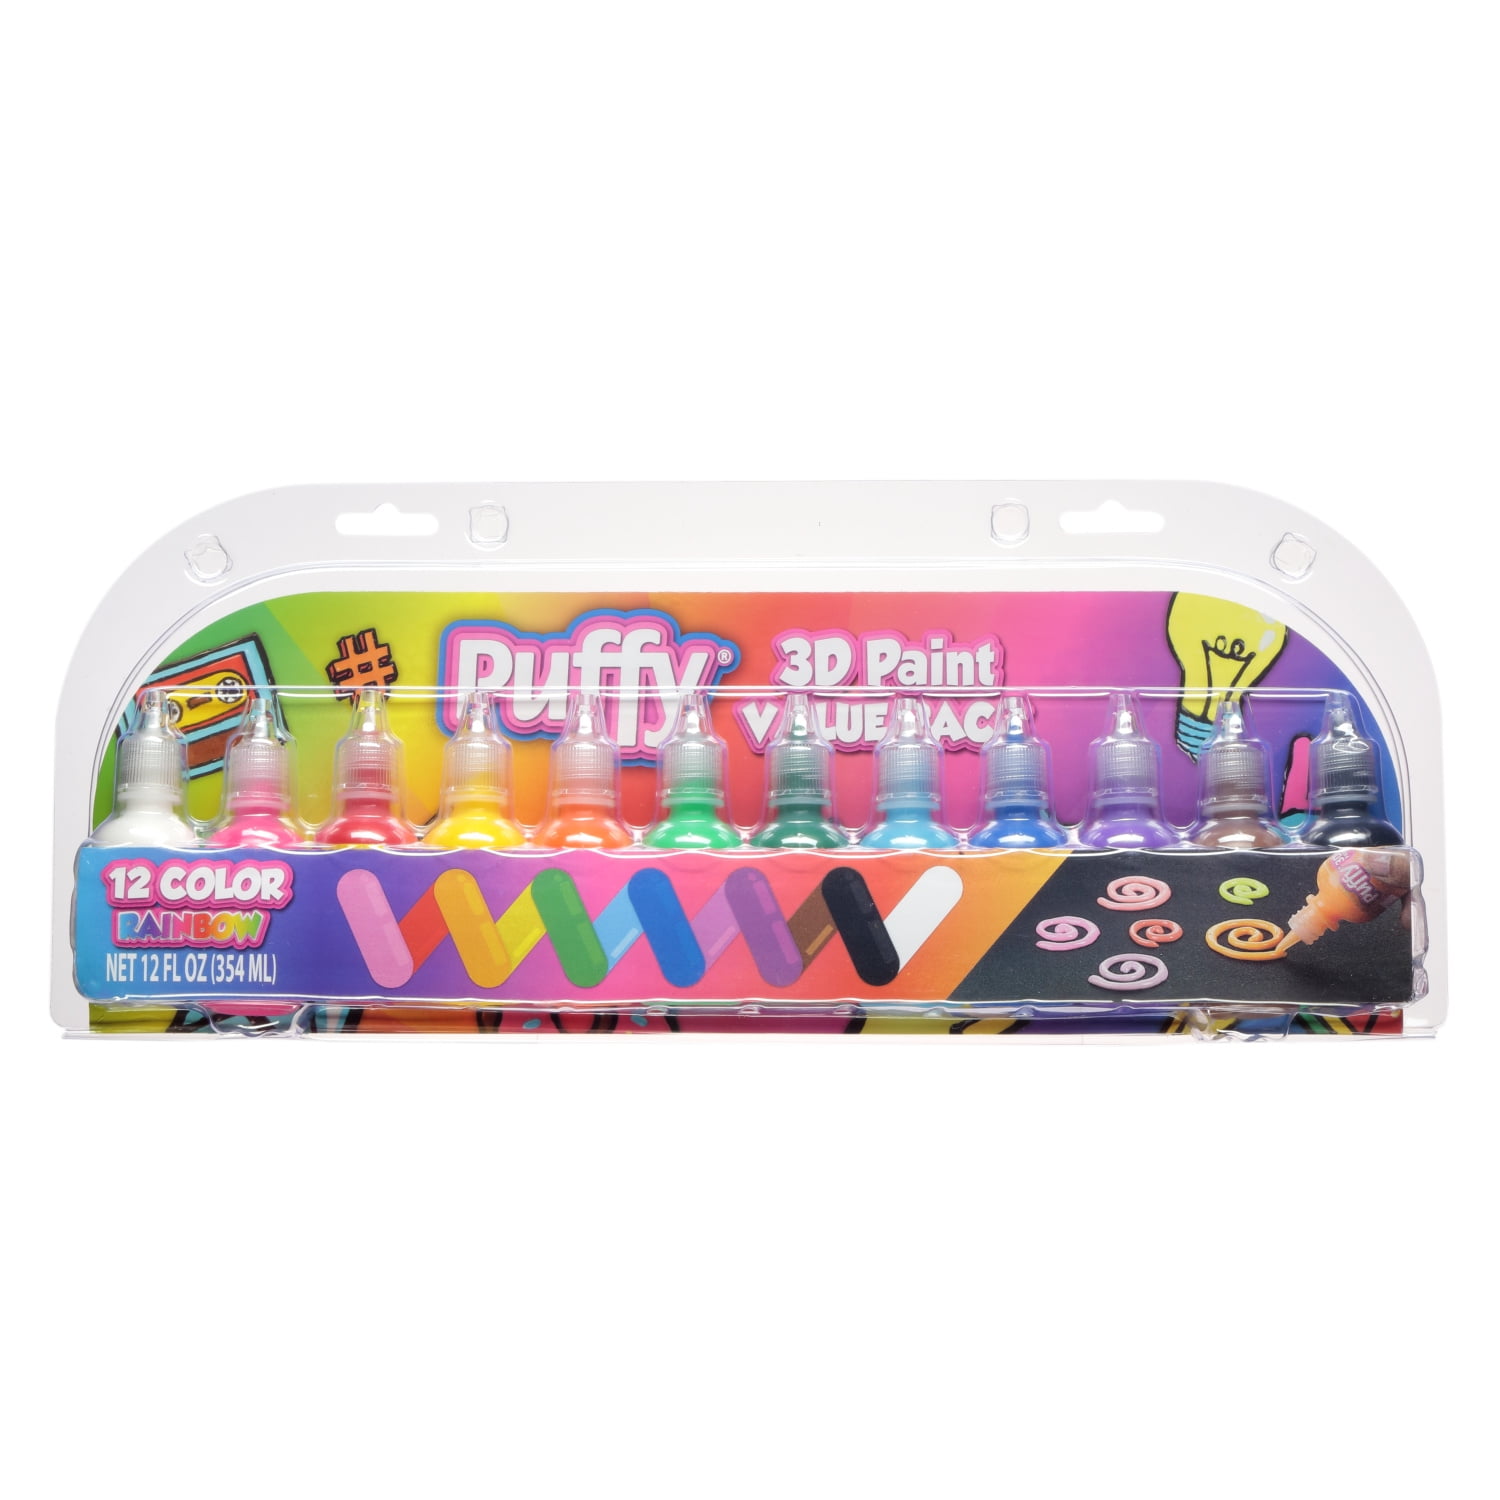 Puffy 1 fl oz 3D Paint Value Pack 12 Color Rainbow, Multi-Surface